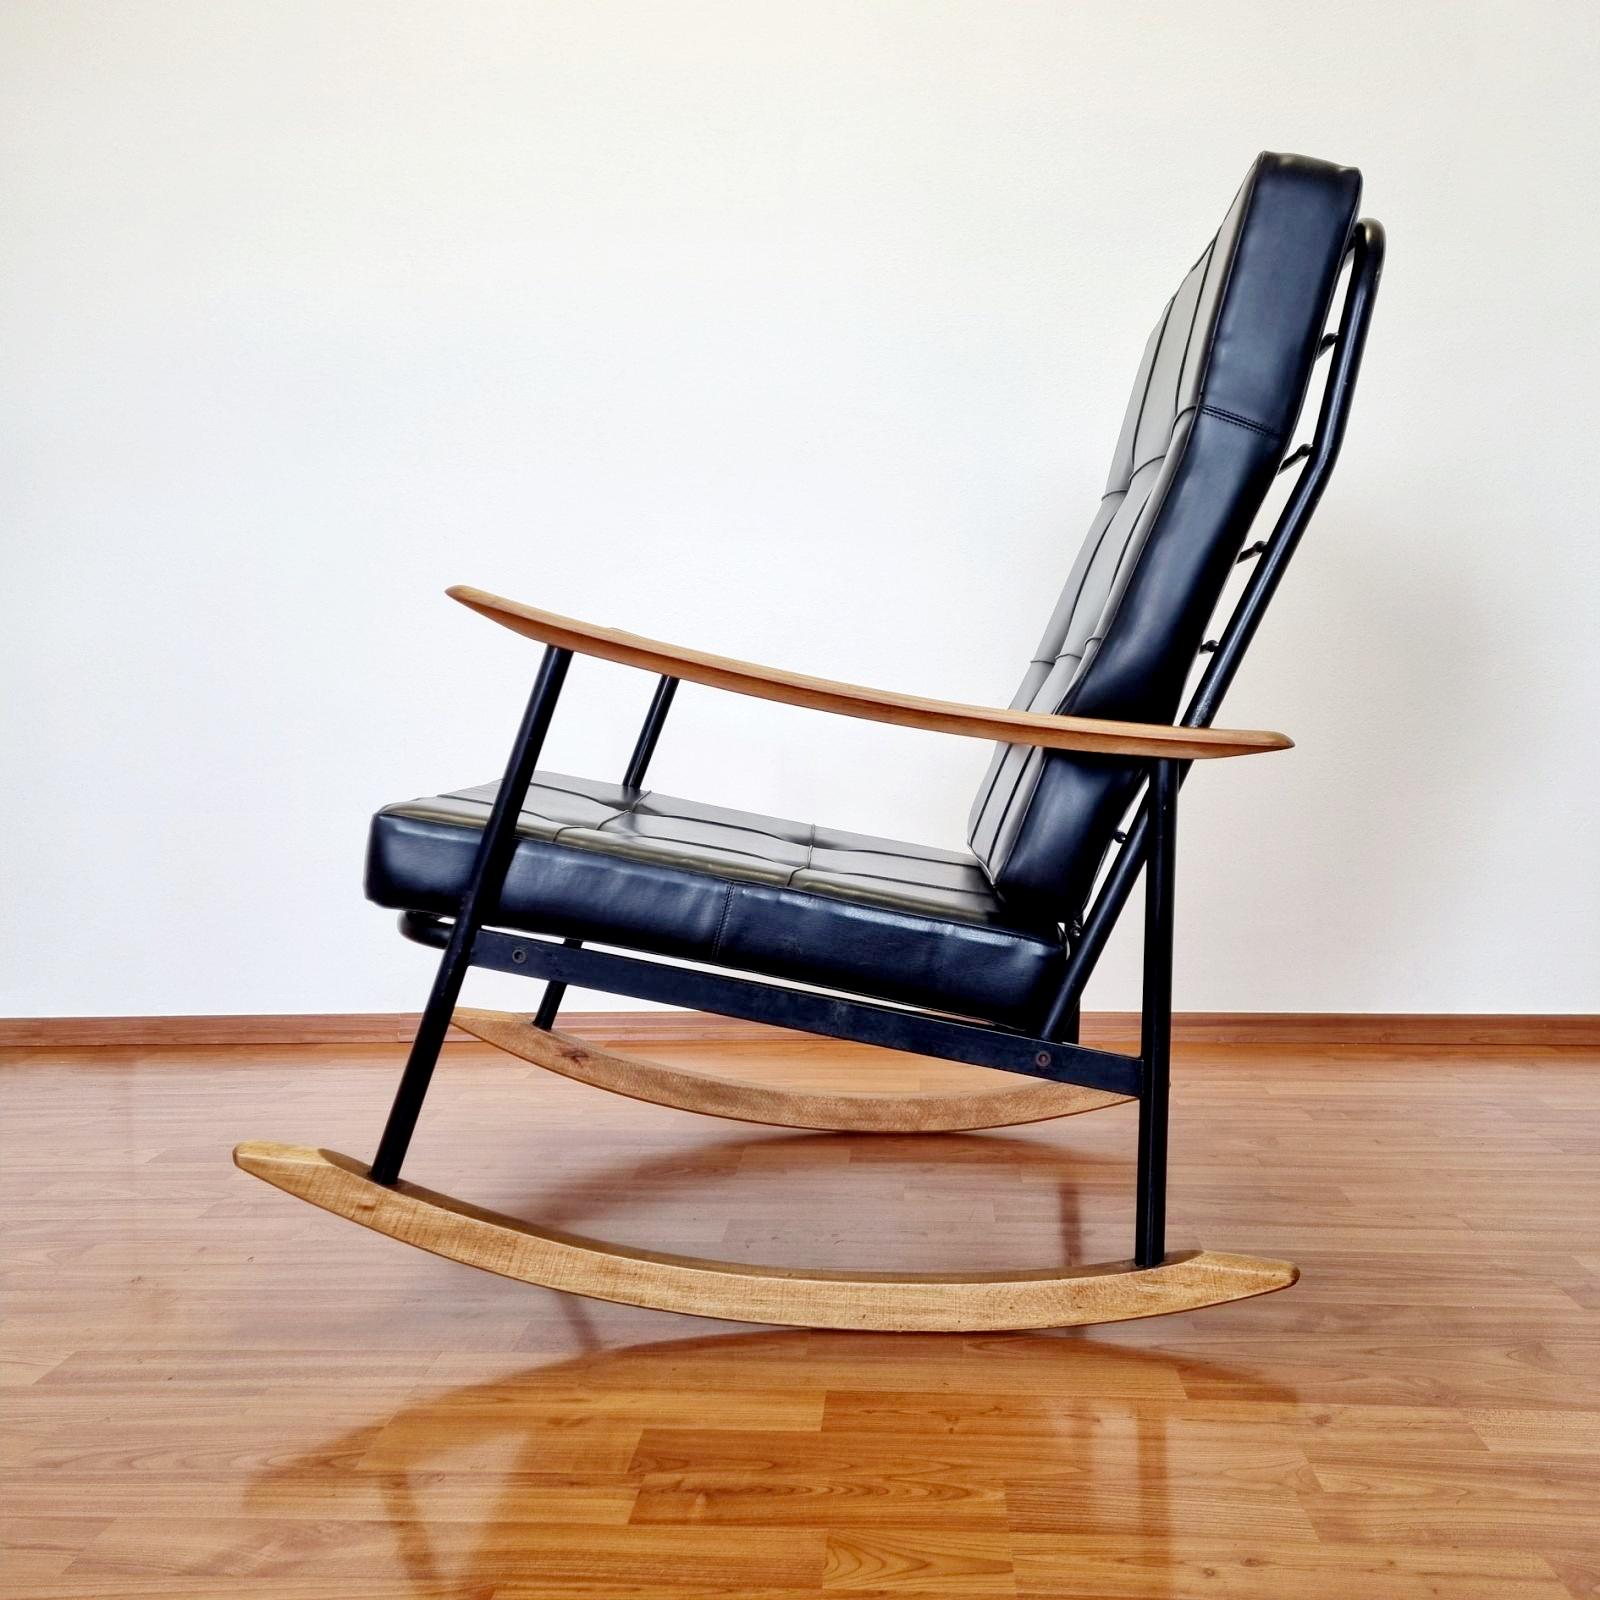 Metal Italian Modern Rocking Chair Designed by Gastone Rinaldi, Italy 60s For Sale